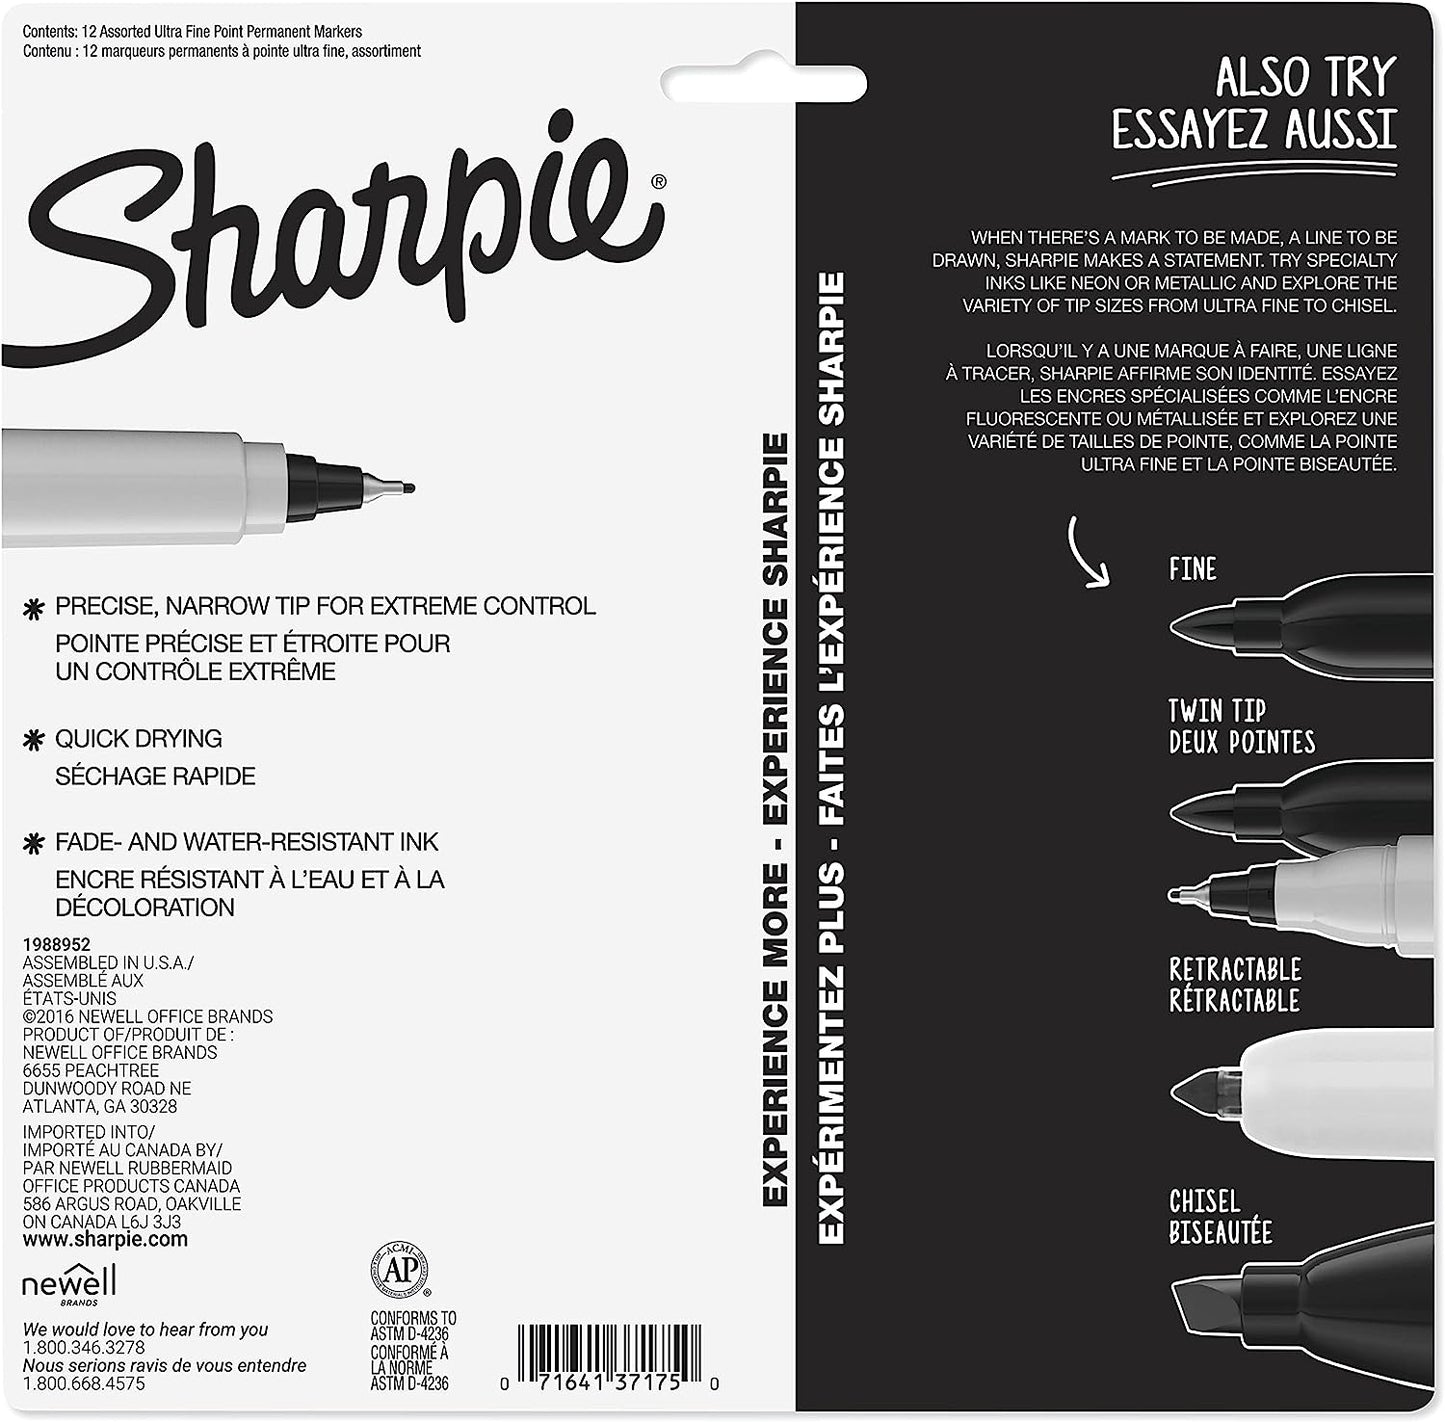 Sharpie Ultra Fine Markers 12 Colors || الوان ماركرز شاربي 12 لون ضعيفة